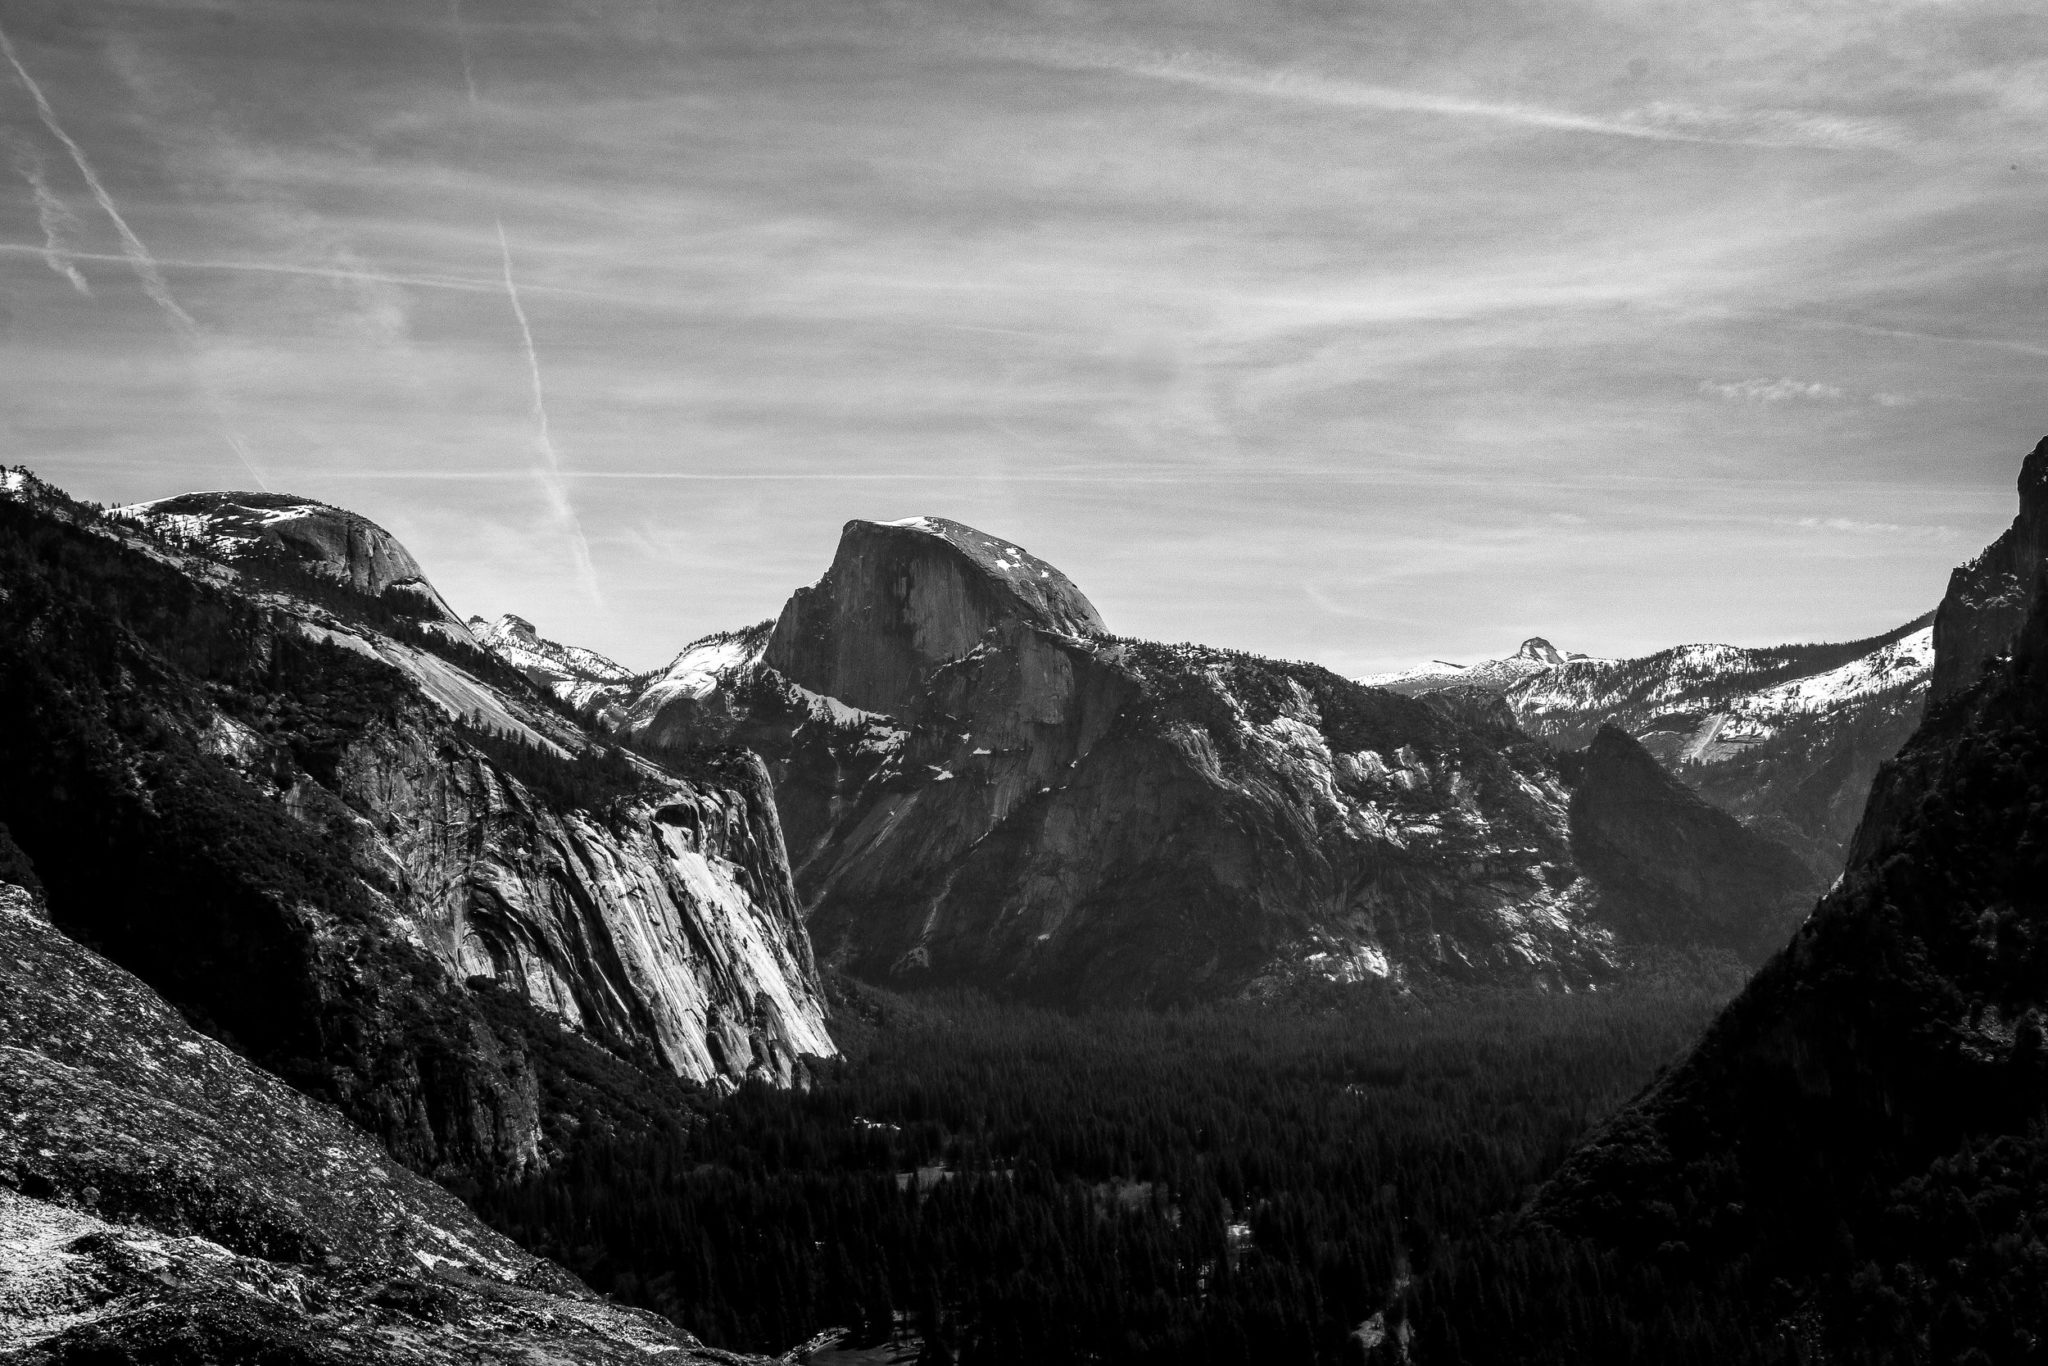 Yosemite national park day hike